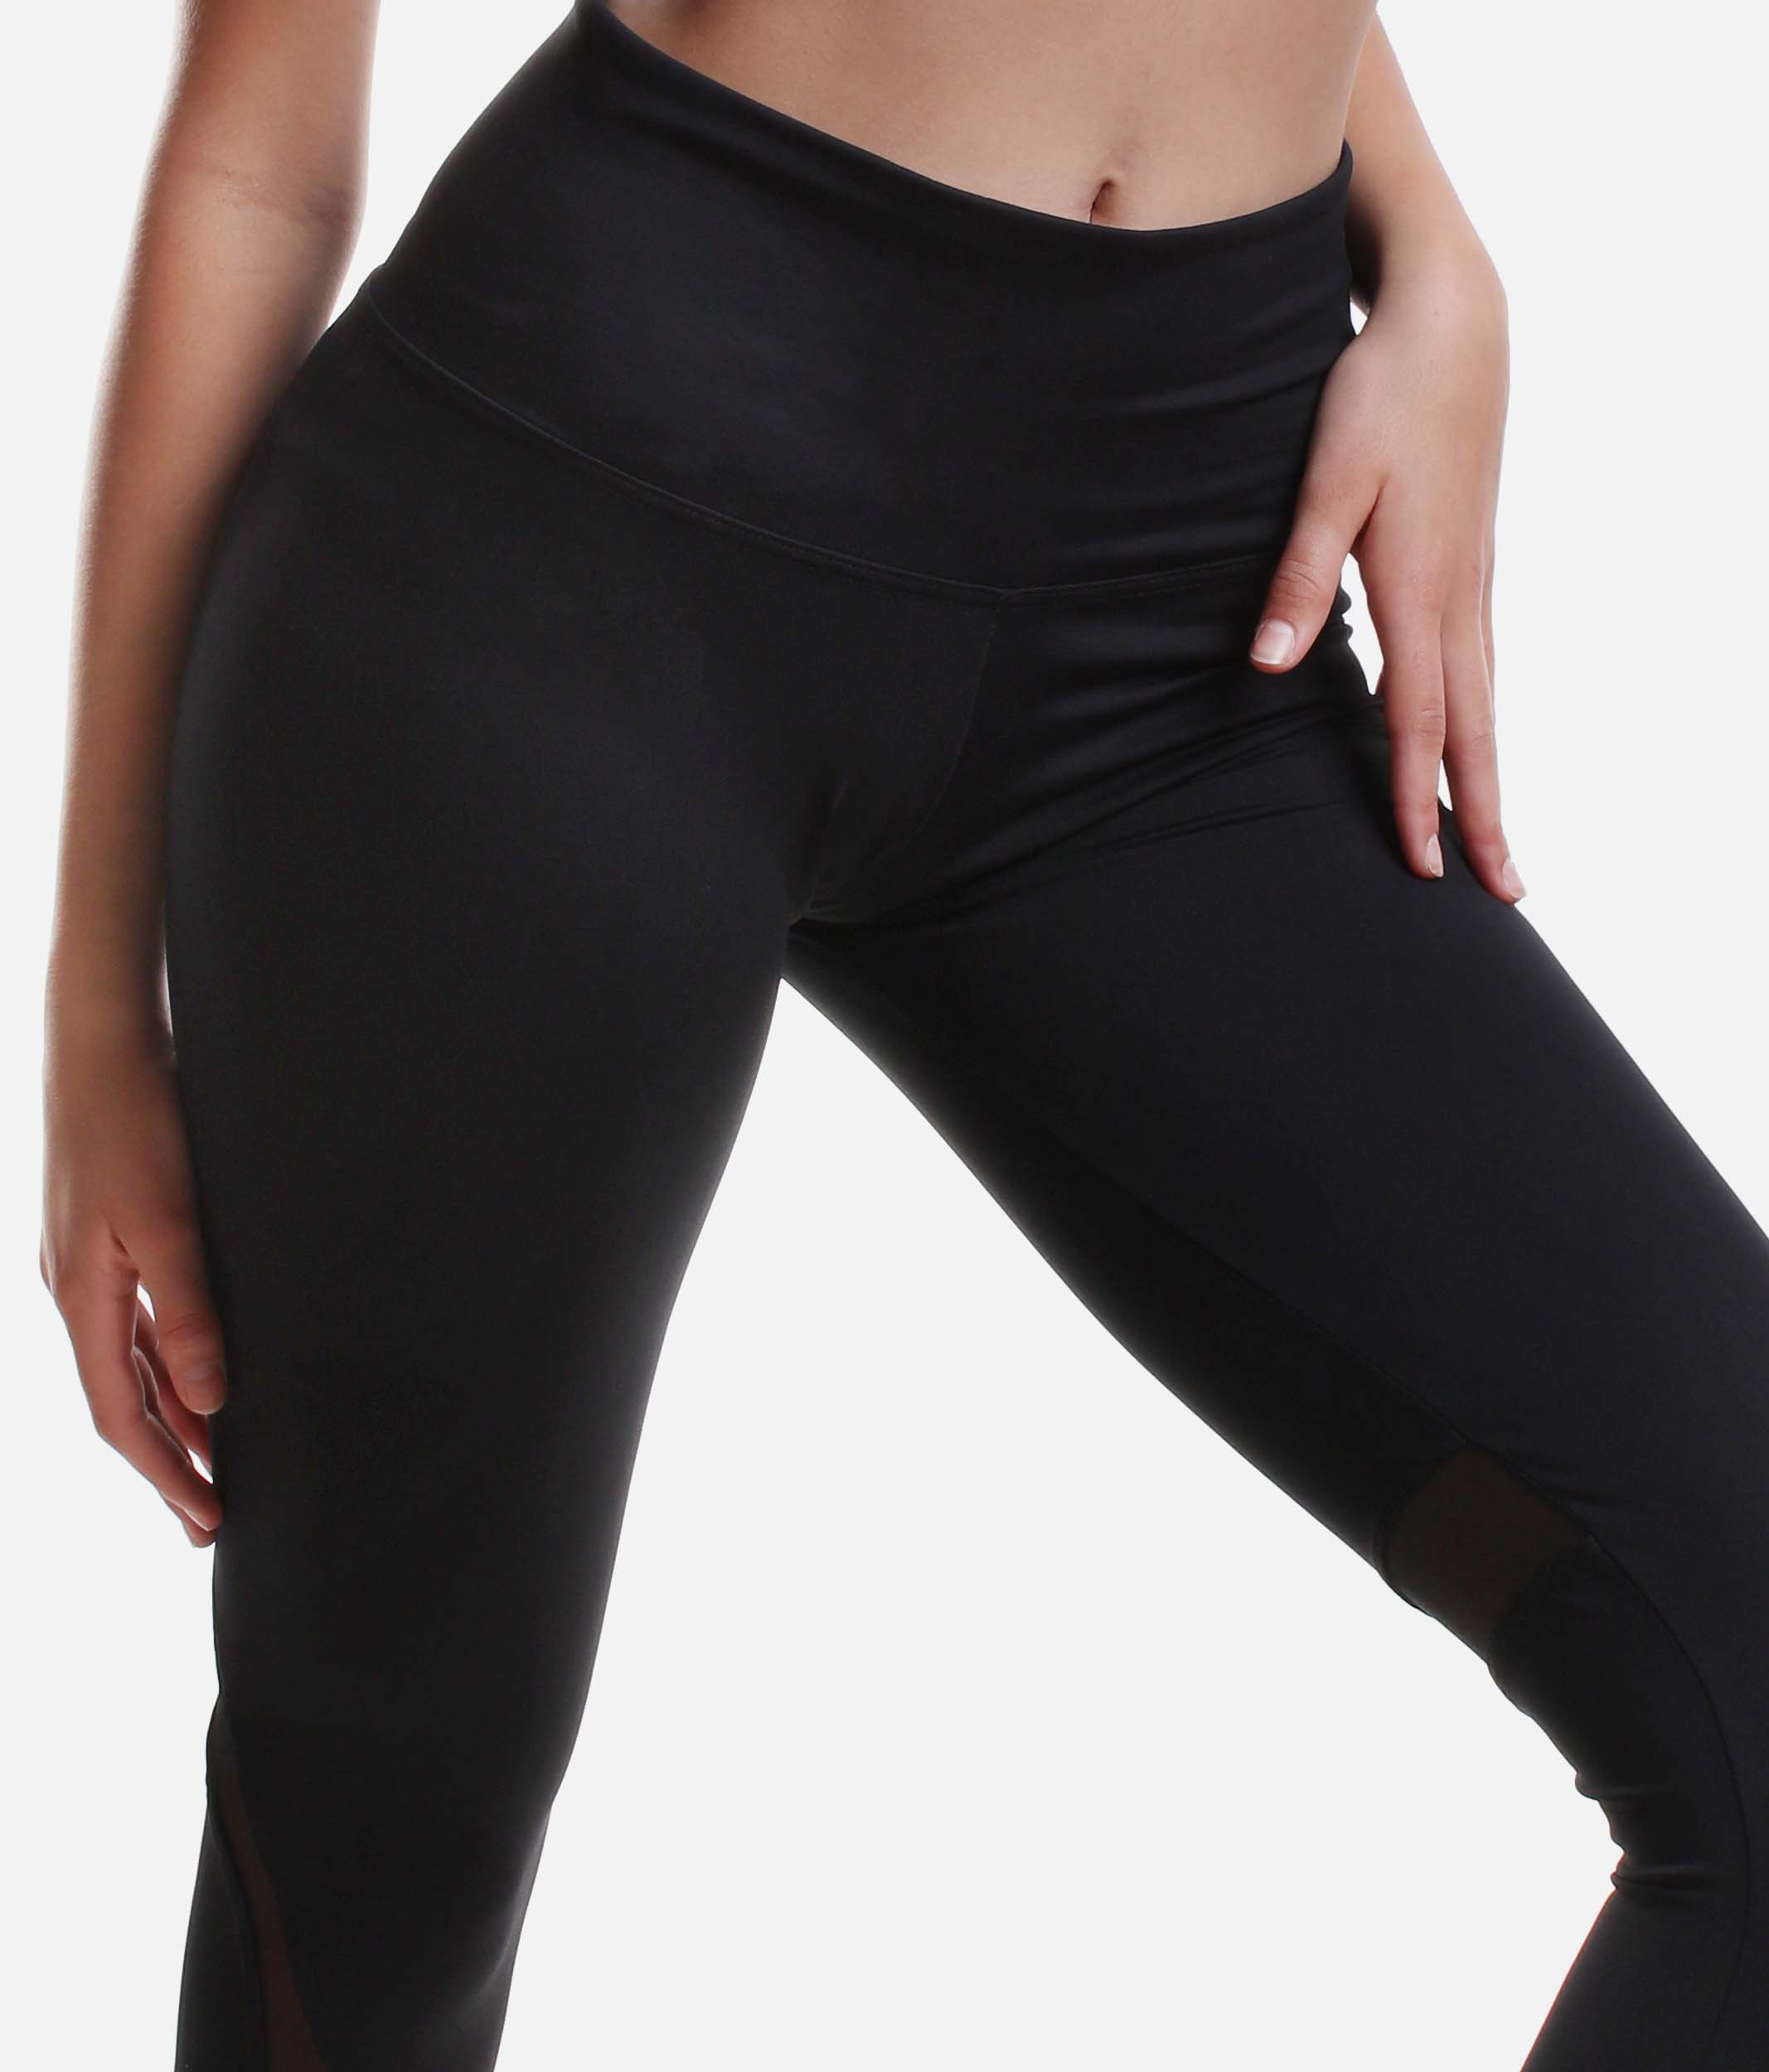 Leggings Yoga Sexy Exercise Pants Fashion Black Cut Out Mesh Womens Workout  Hot | eBay